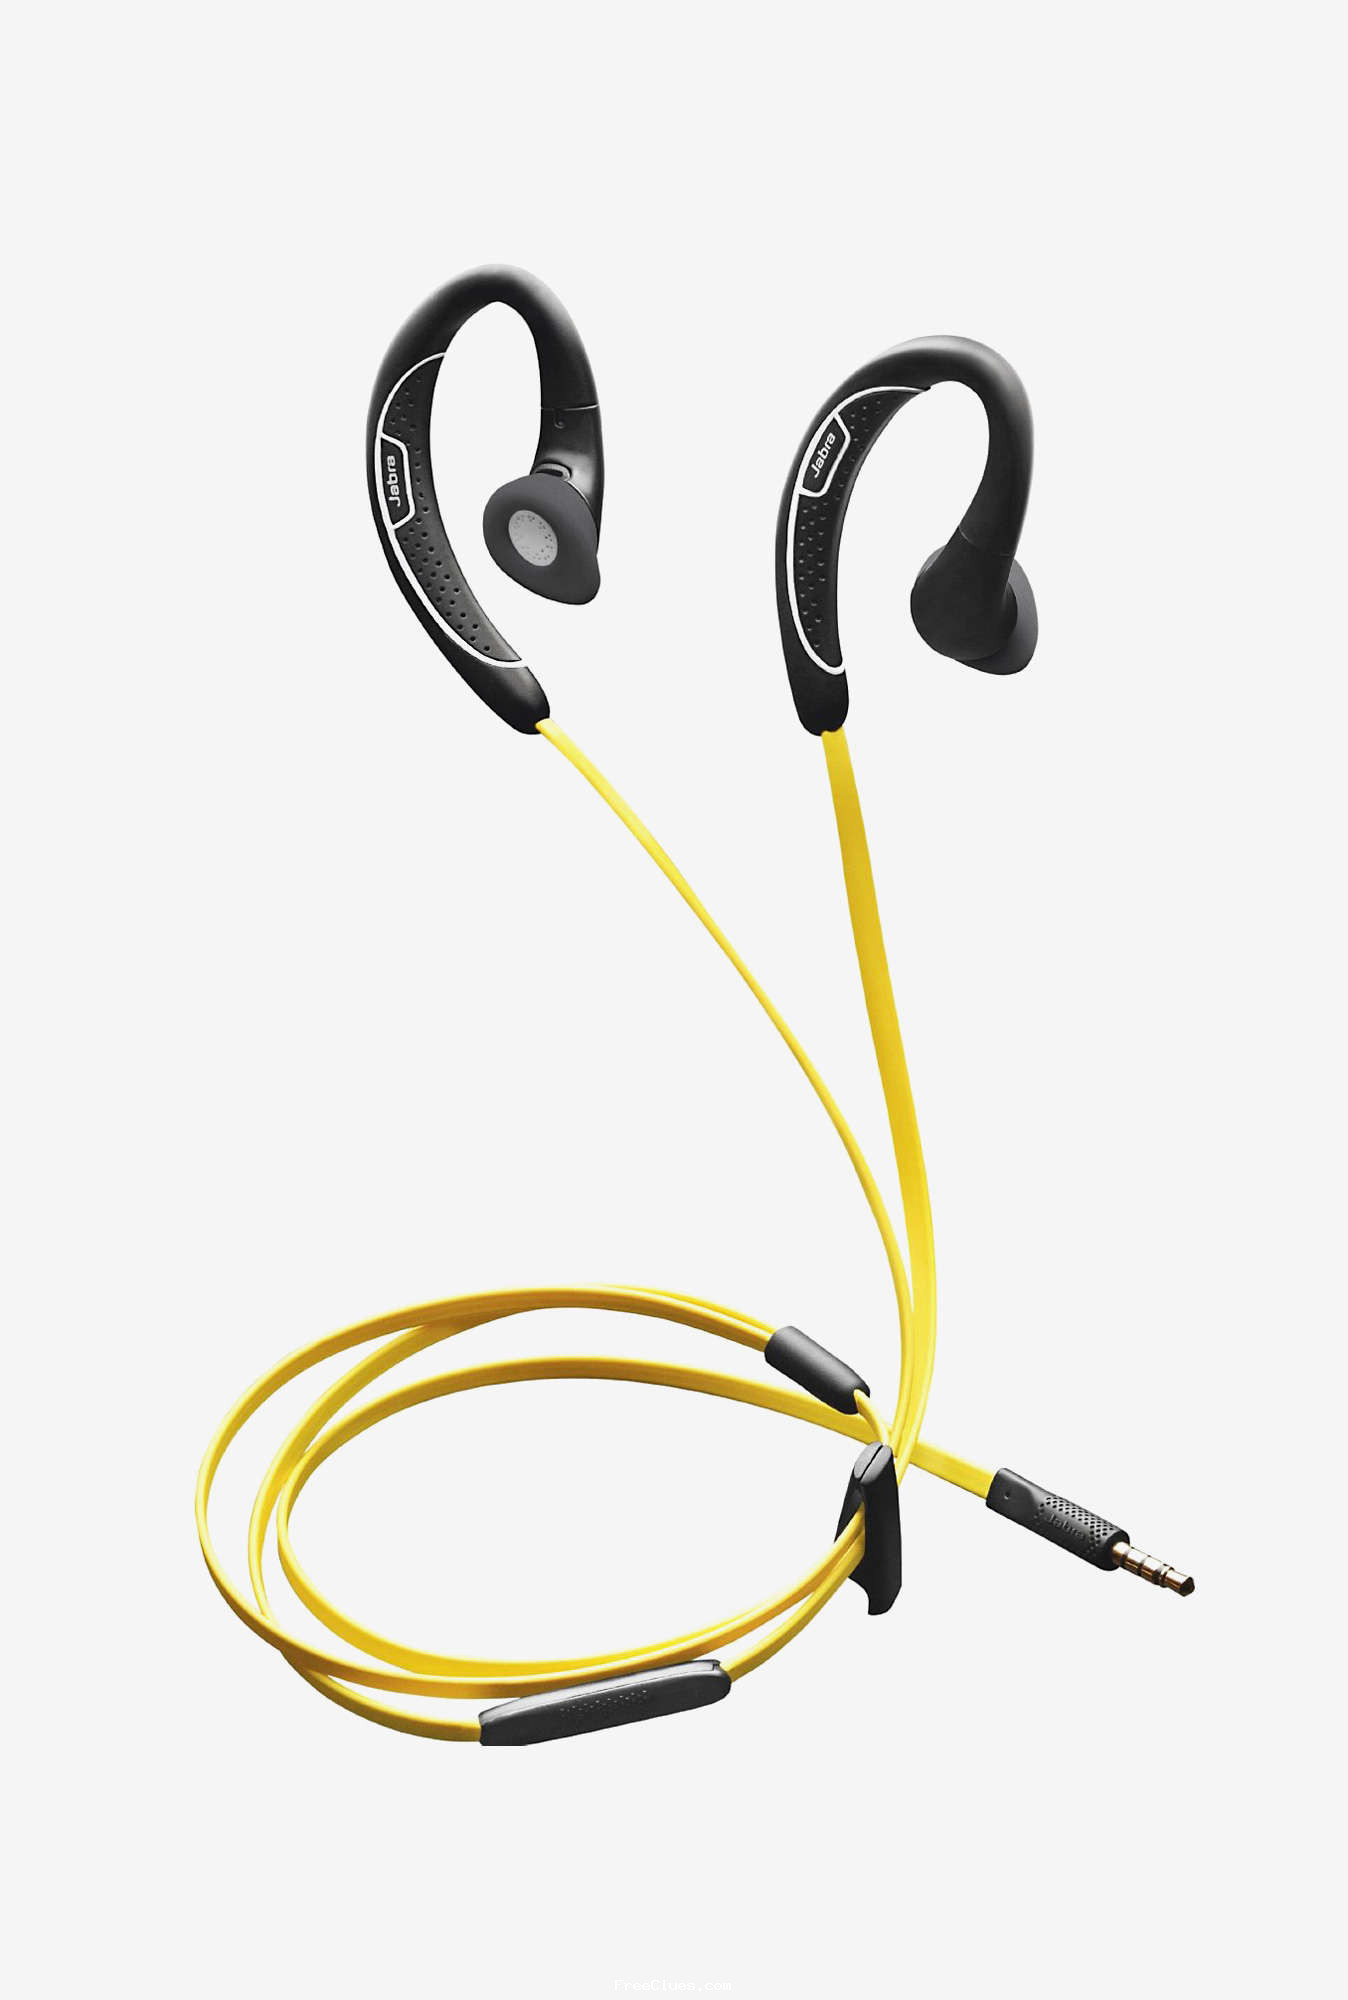 tatacliq Jabra Sport Corded Stereo Headset (Yellow/Black)